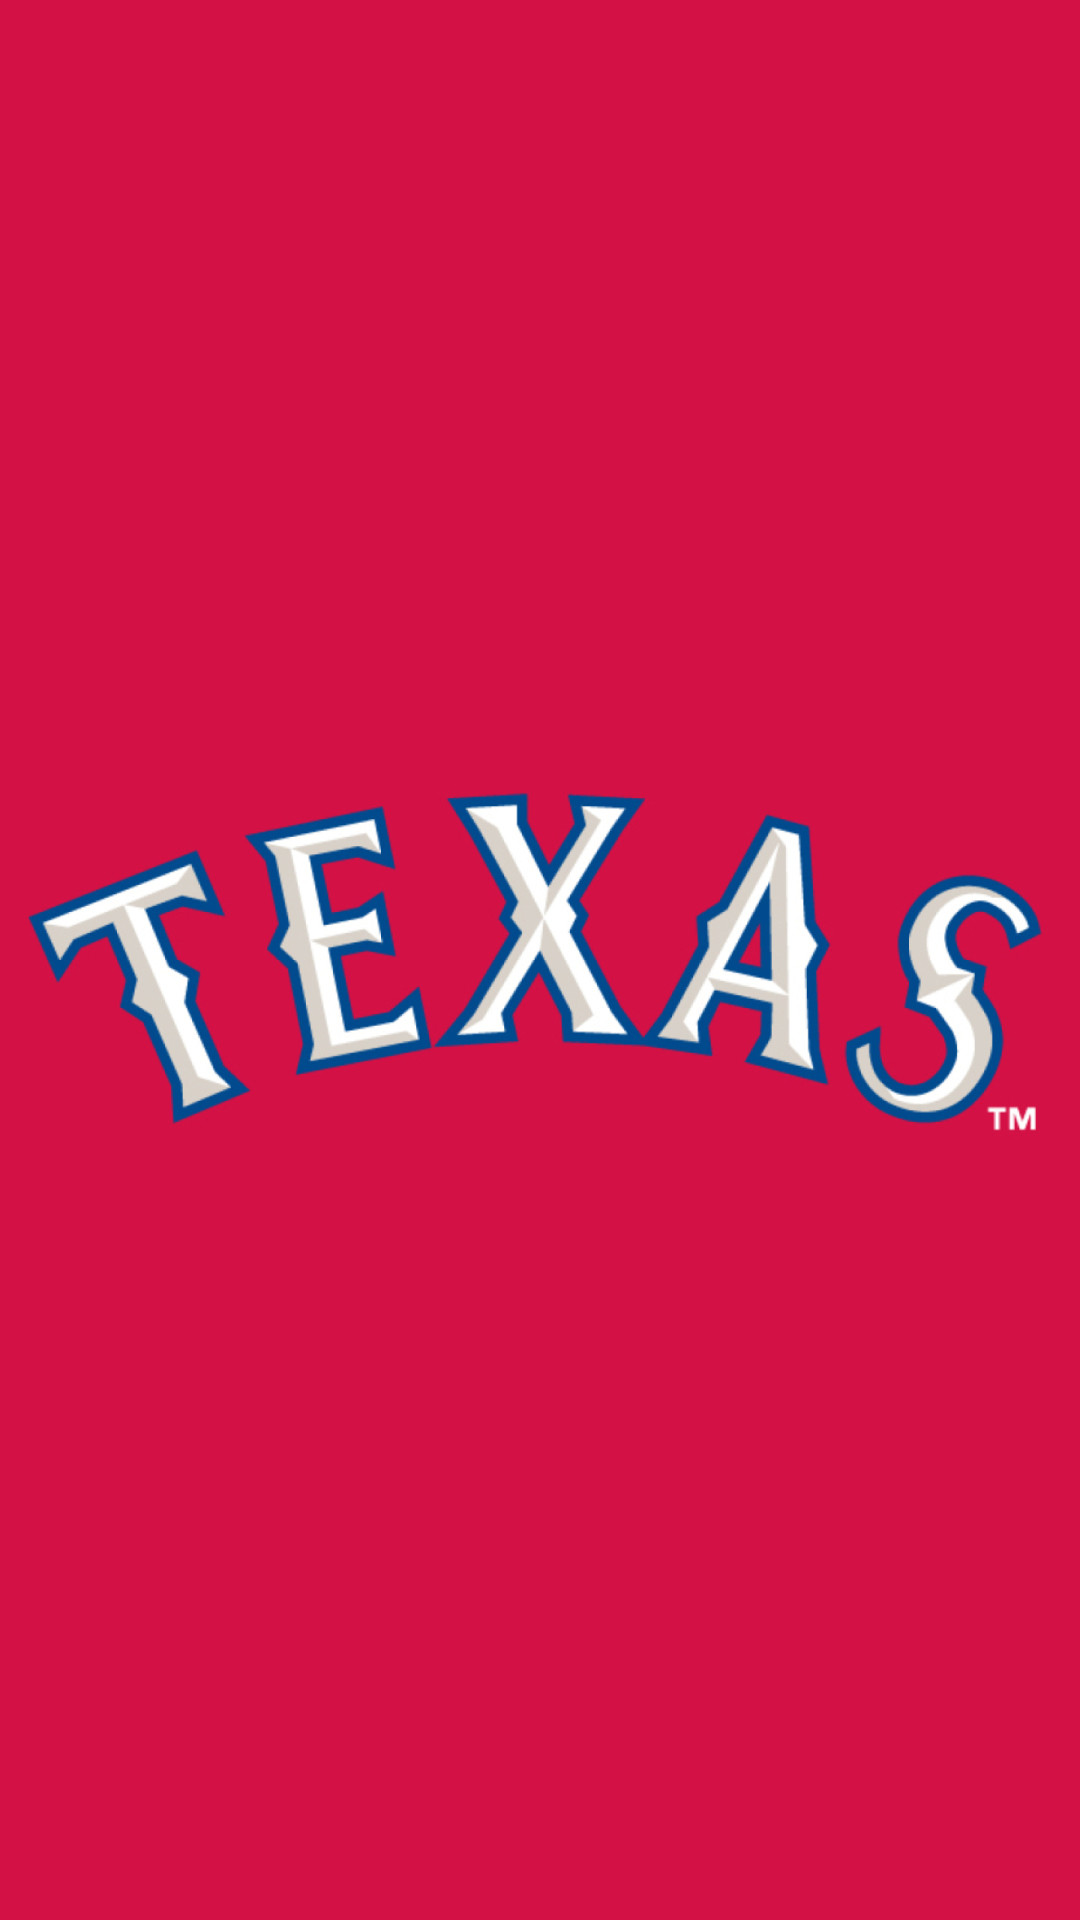 texas rangers iphone wallpaper,text,font,red,pink,logo